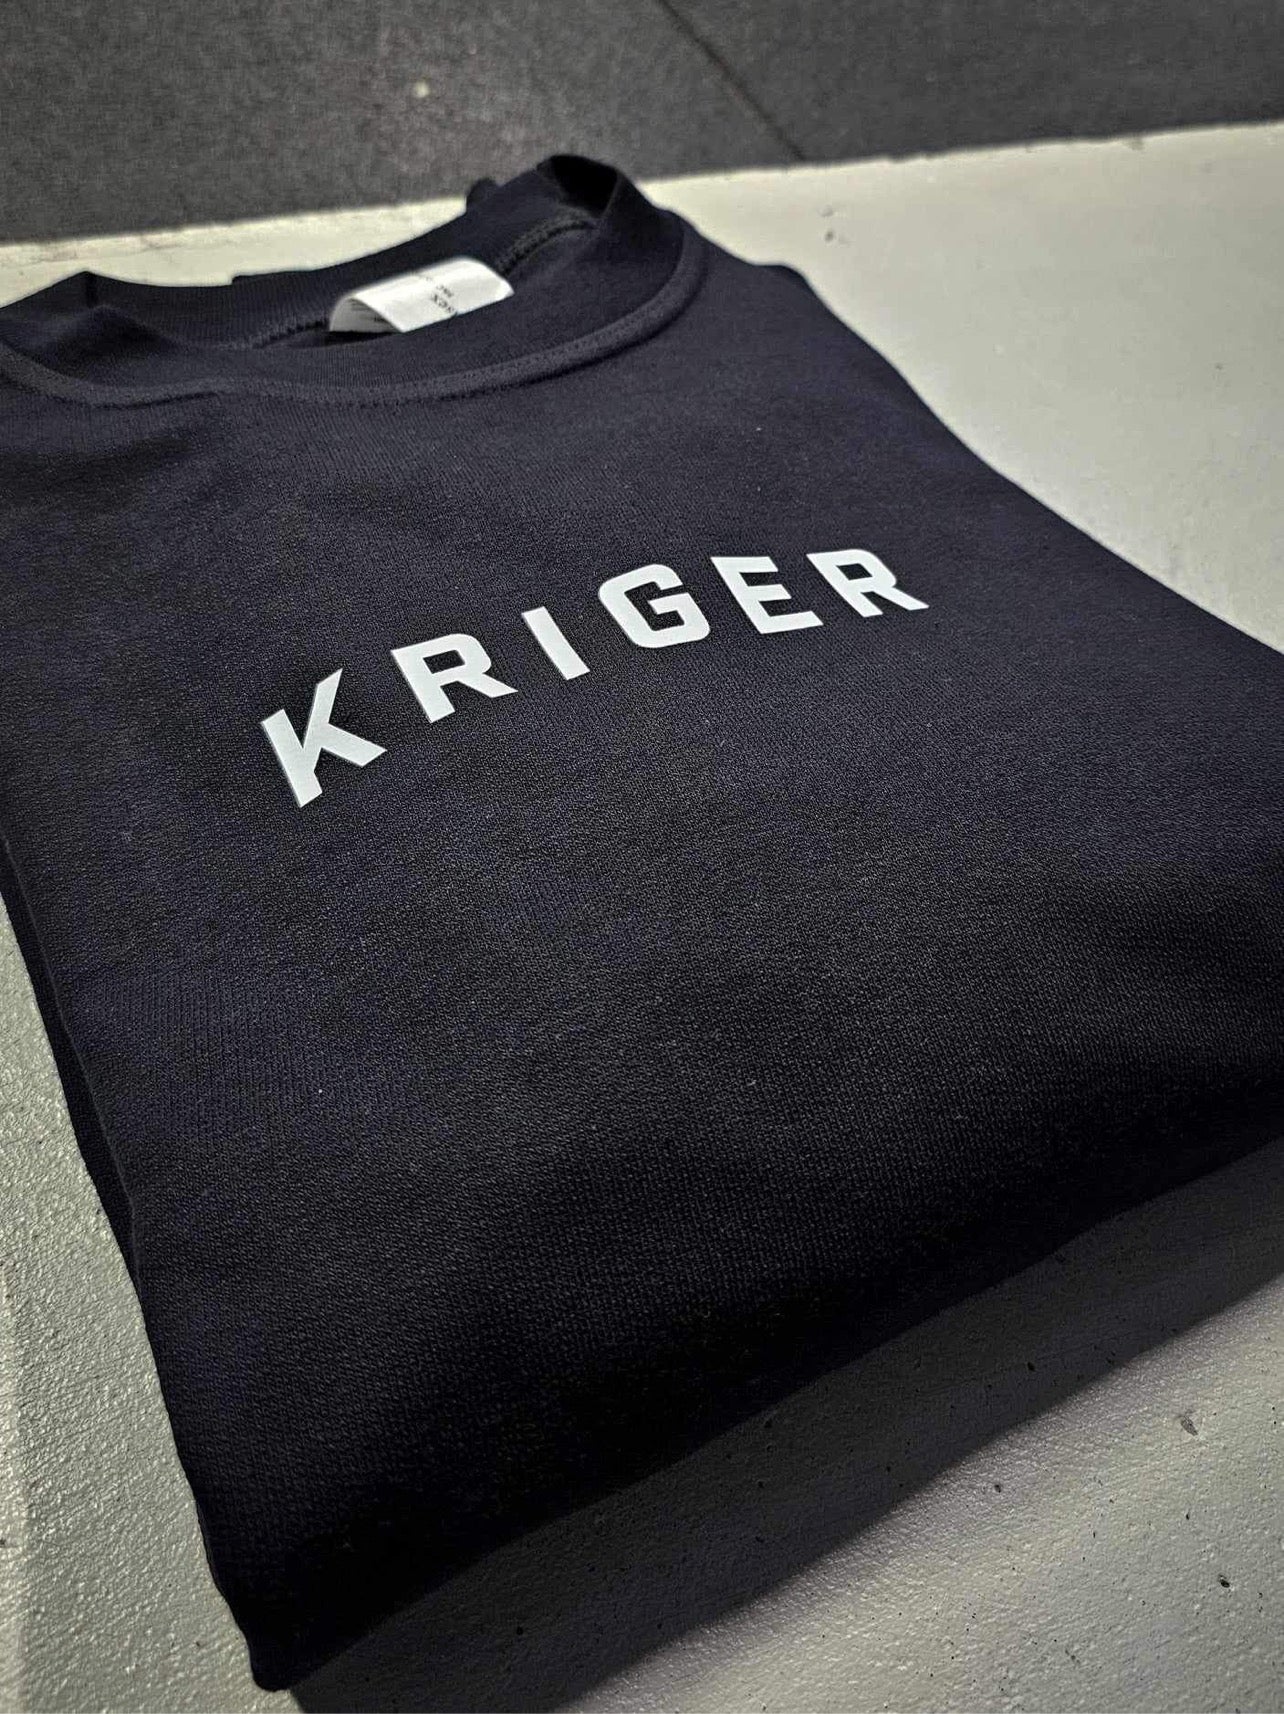 Kriger Training Quote Crew Sweatshirt (Black)